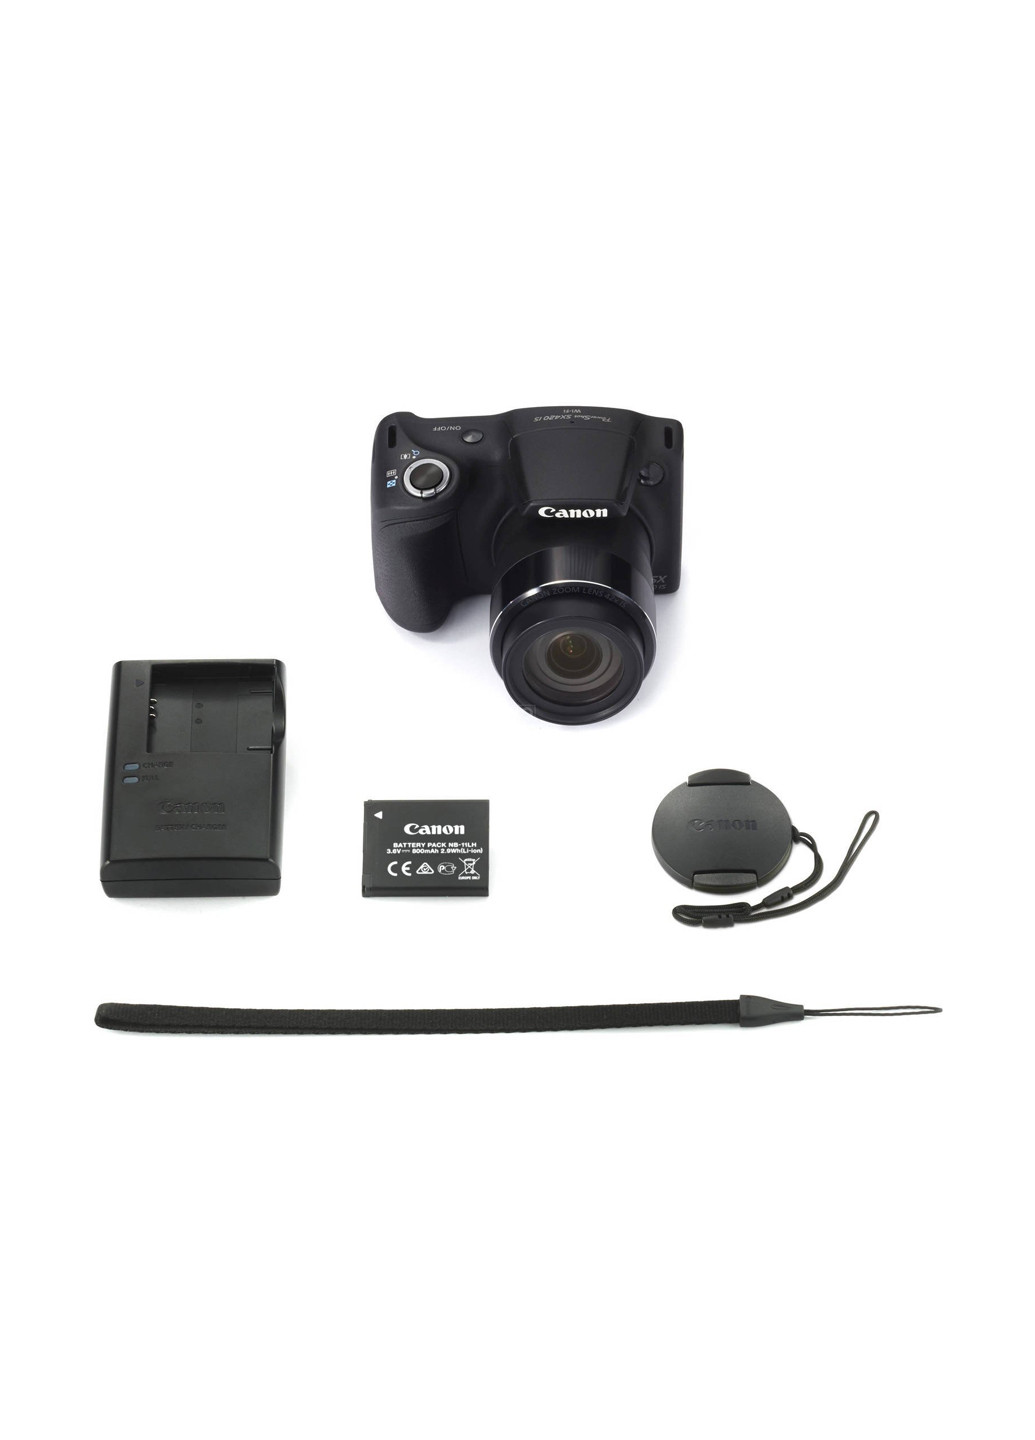 Компактна фотокамера Canon powershot sx420 is black (130567456)